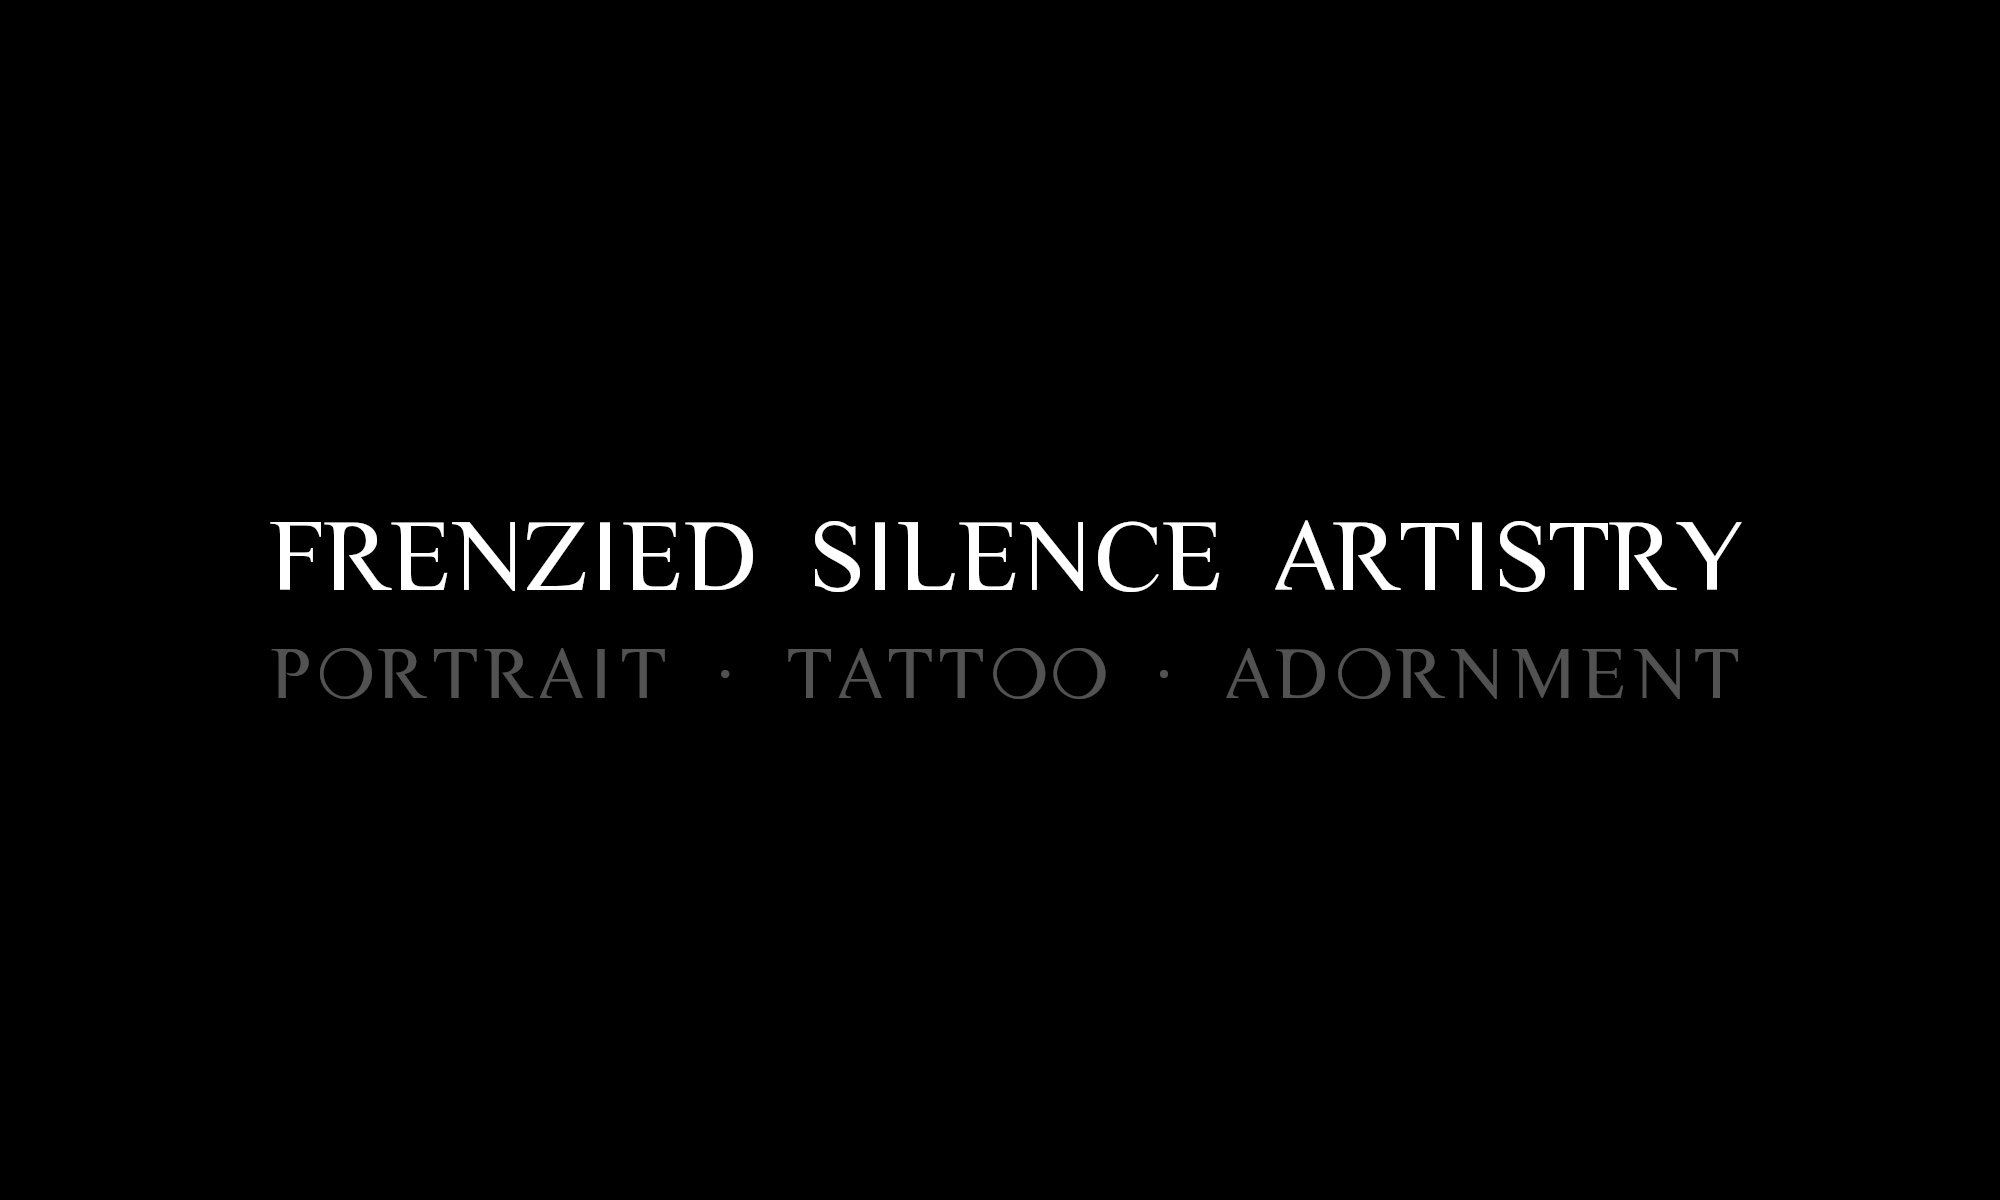 FRENZIED SILENCE ARTISTRY